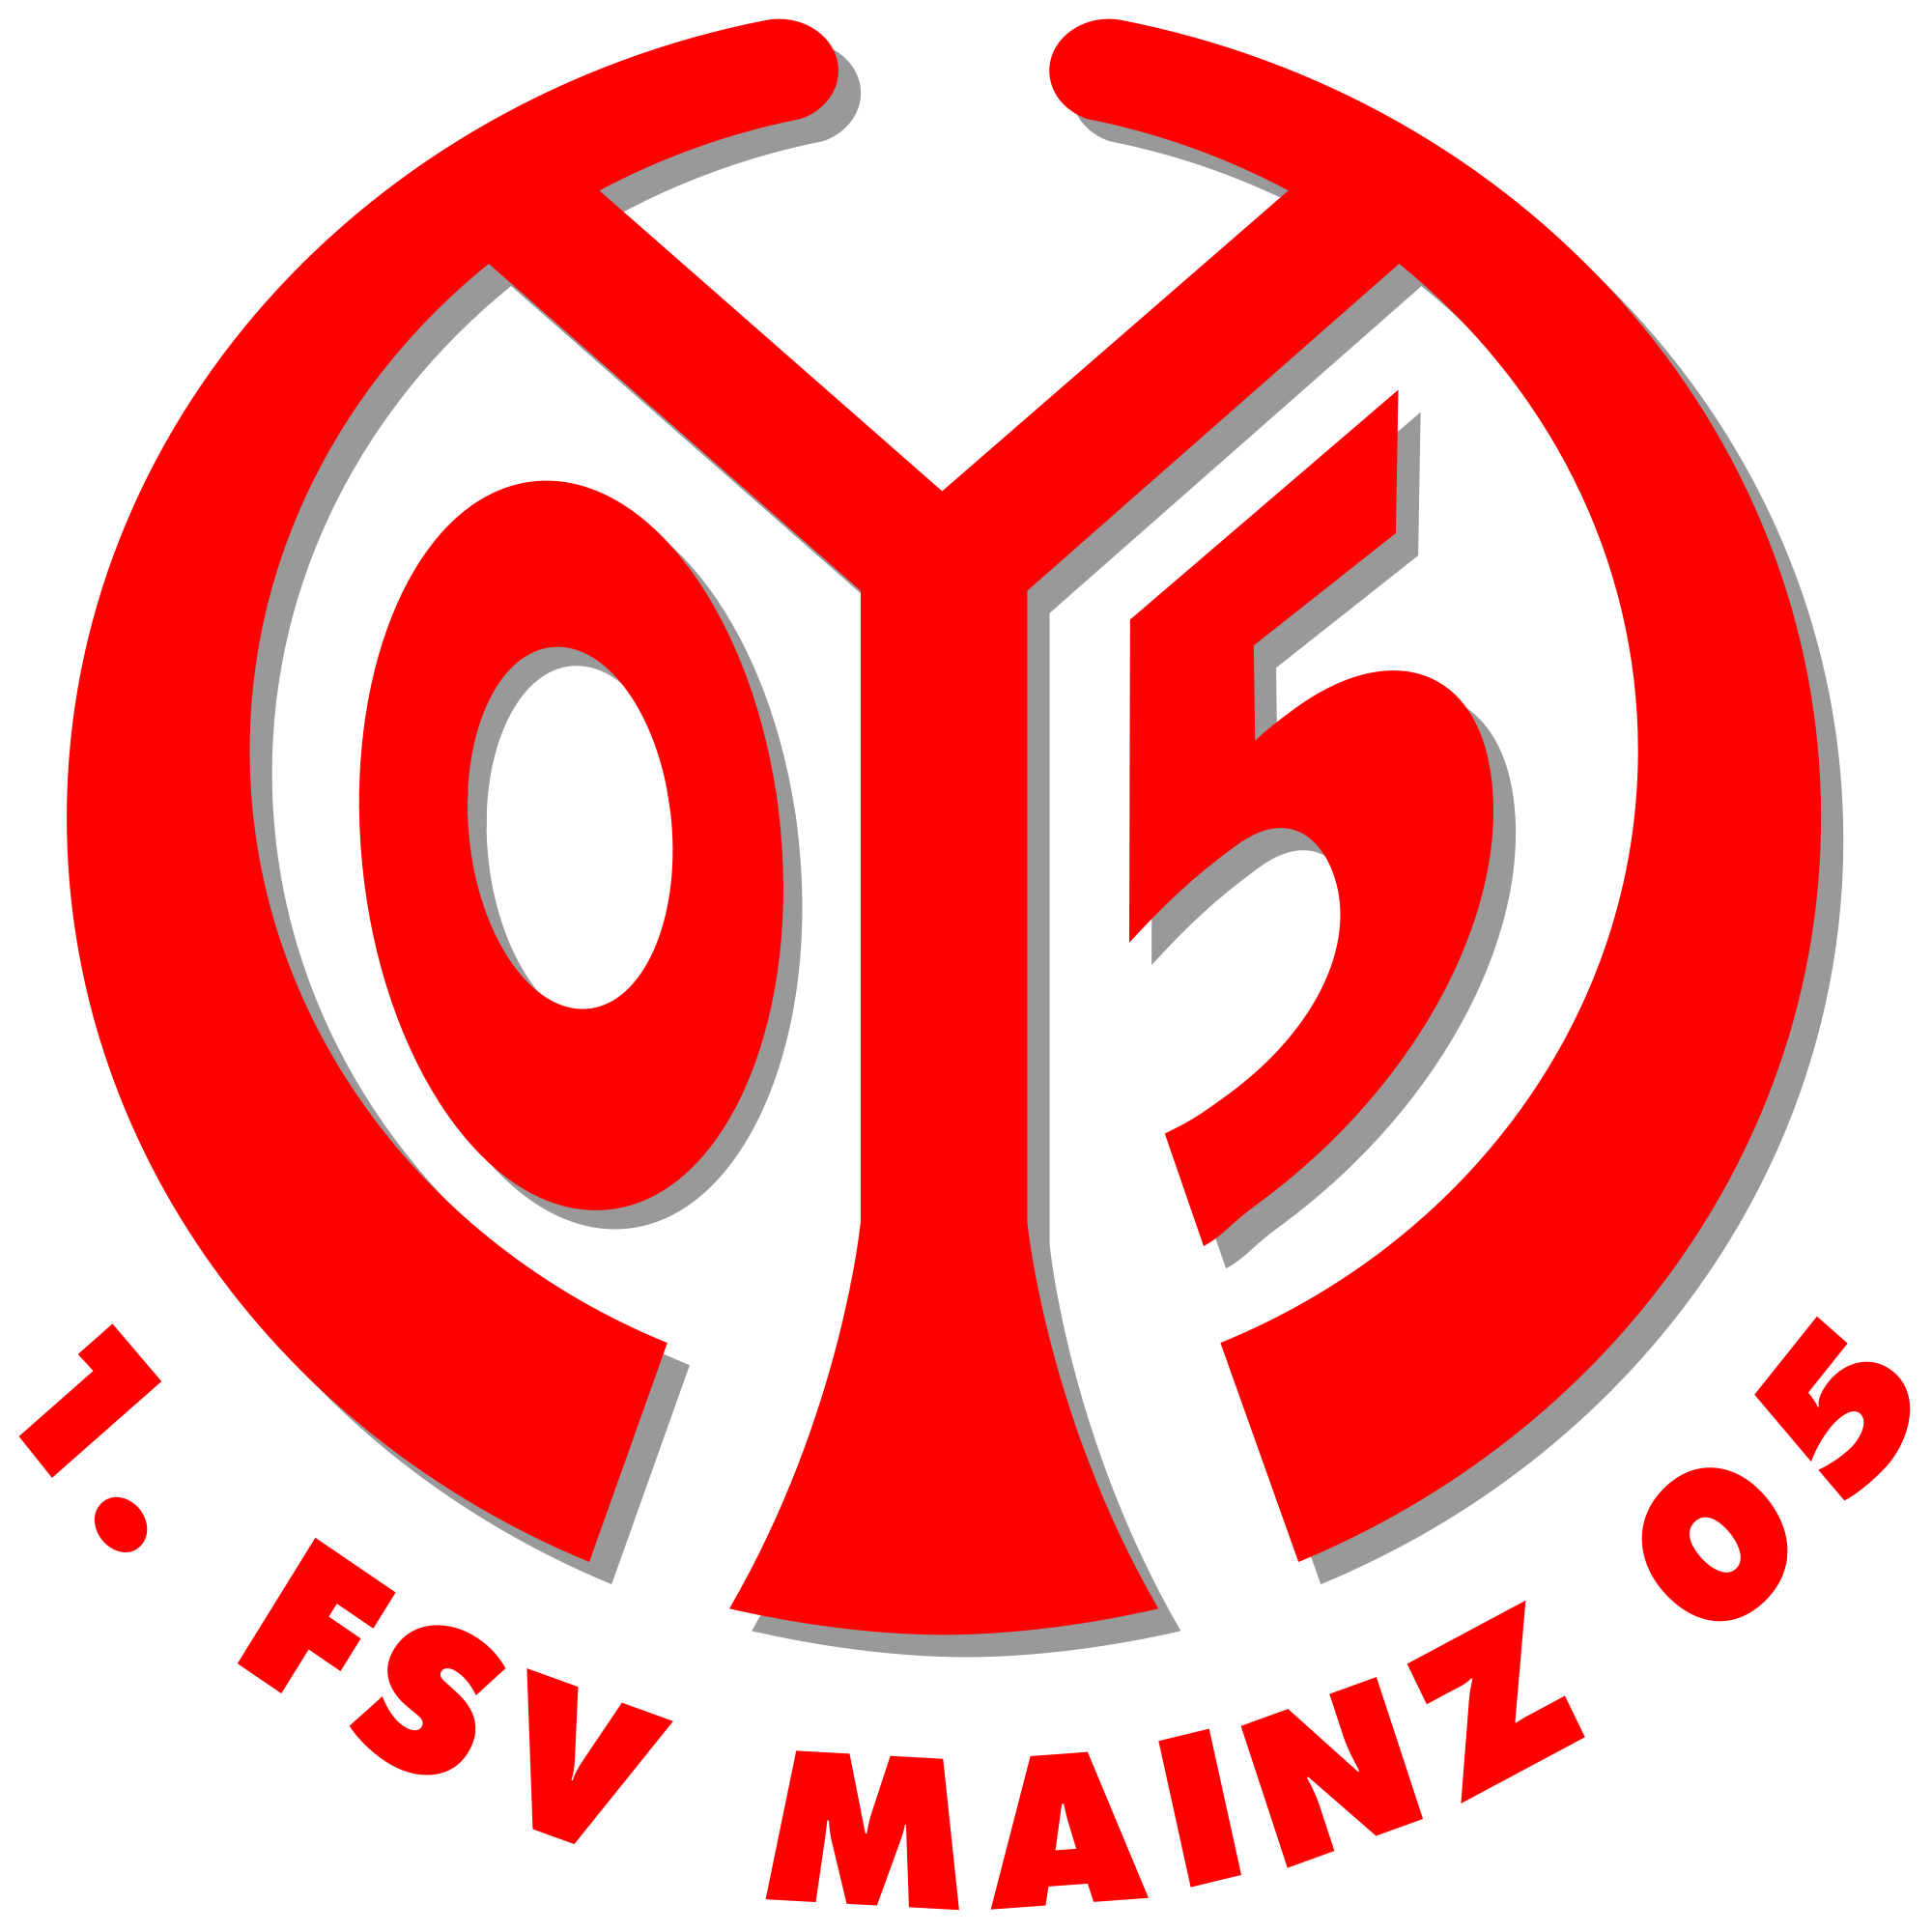 FSV Mainz